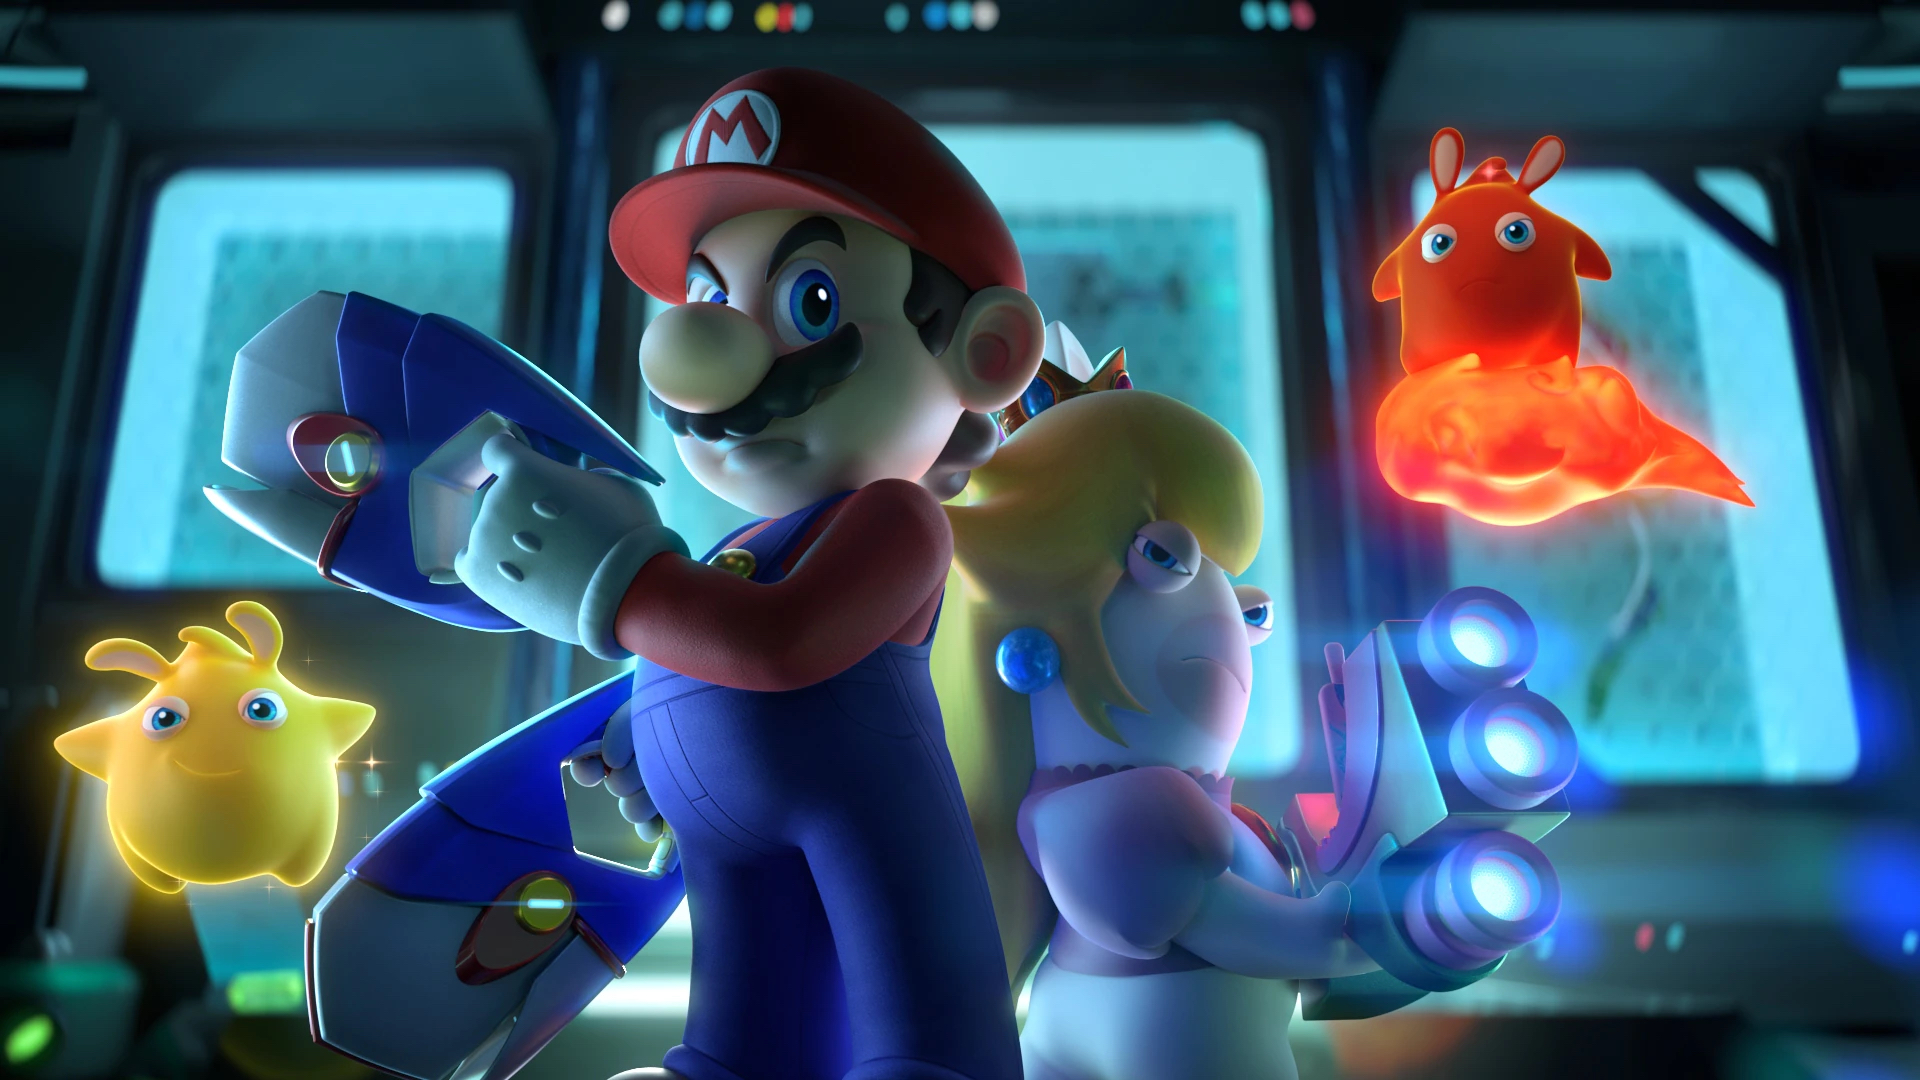 Mario + Rabbids Sparks Of Hope Nintendo Switch - BeB Games